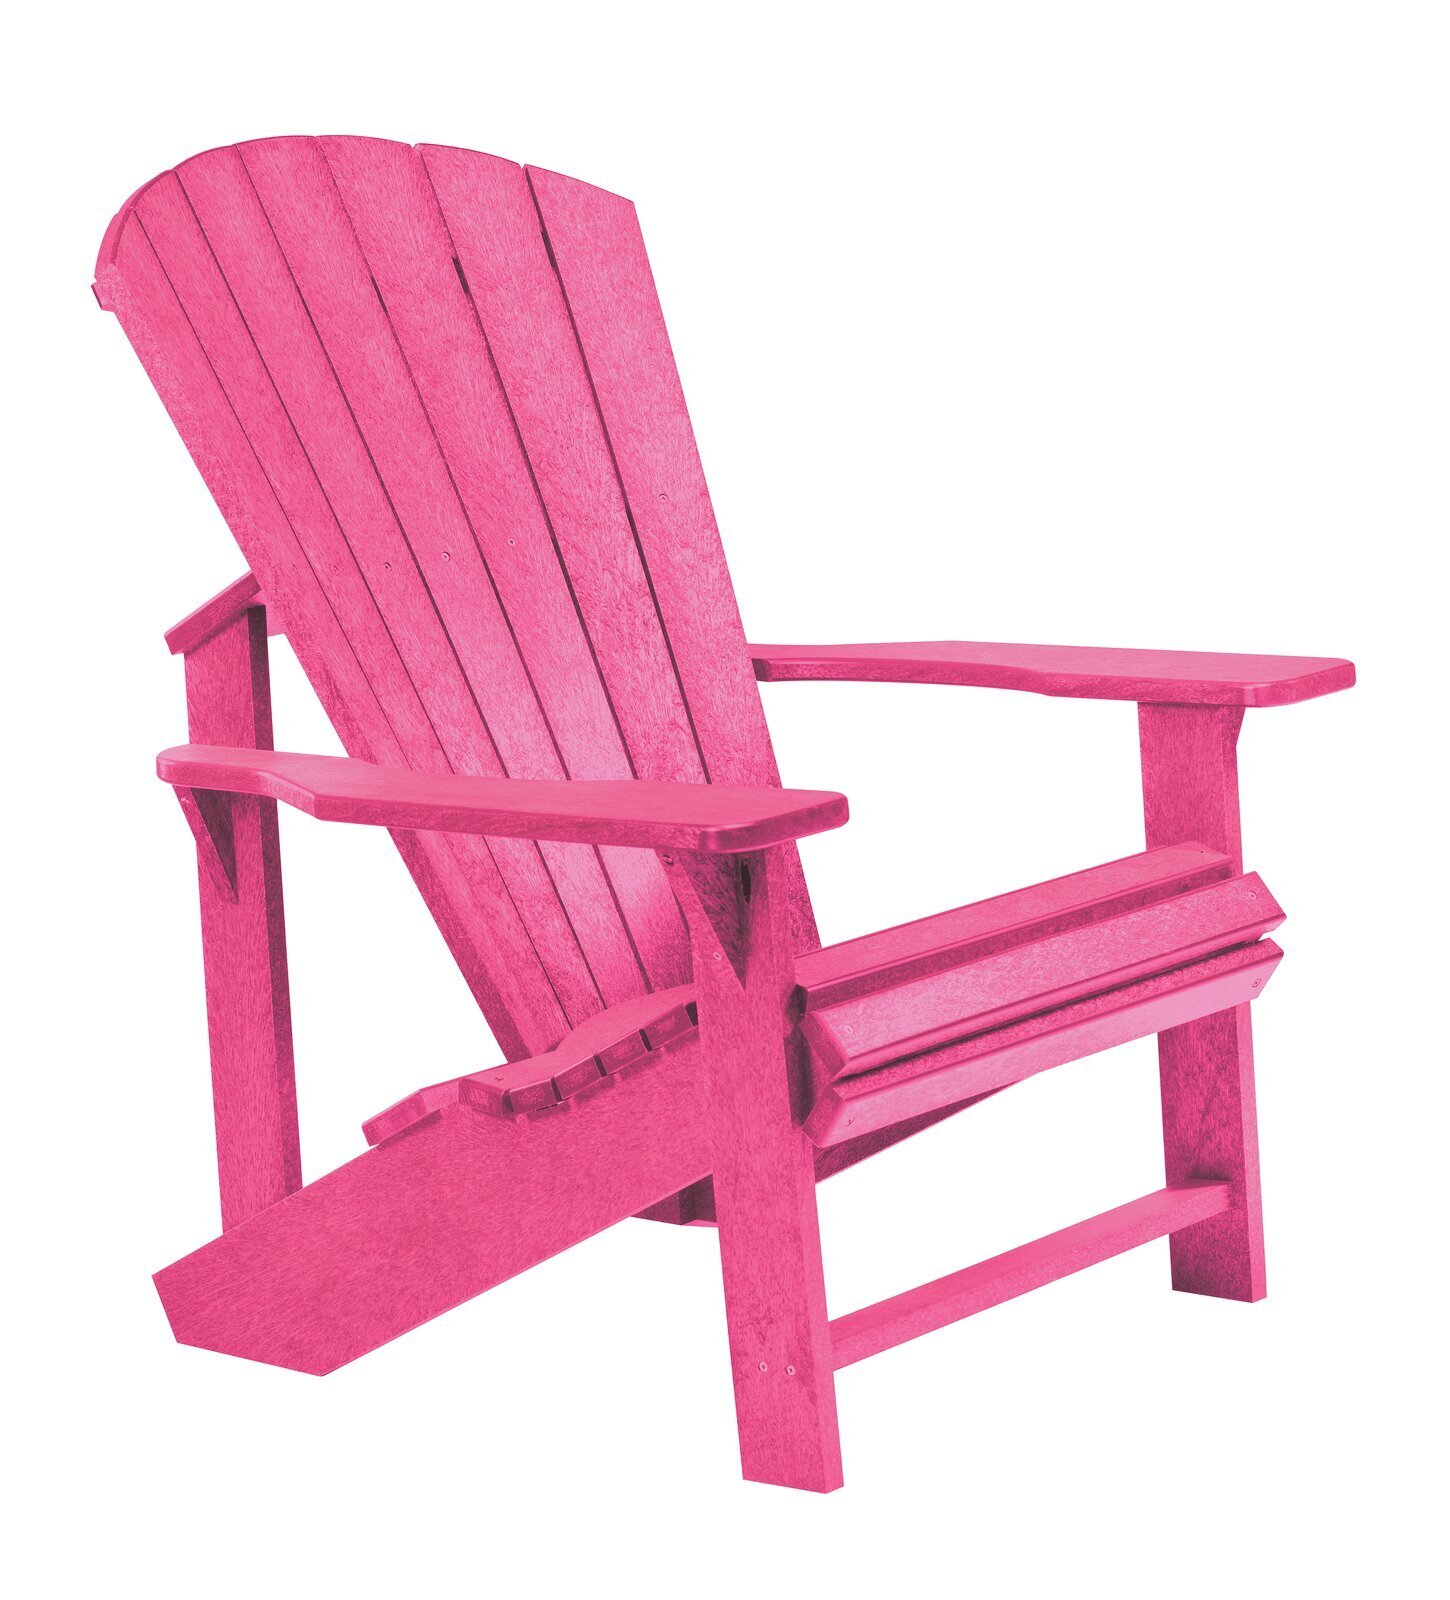 Pink Adirondack Chair